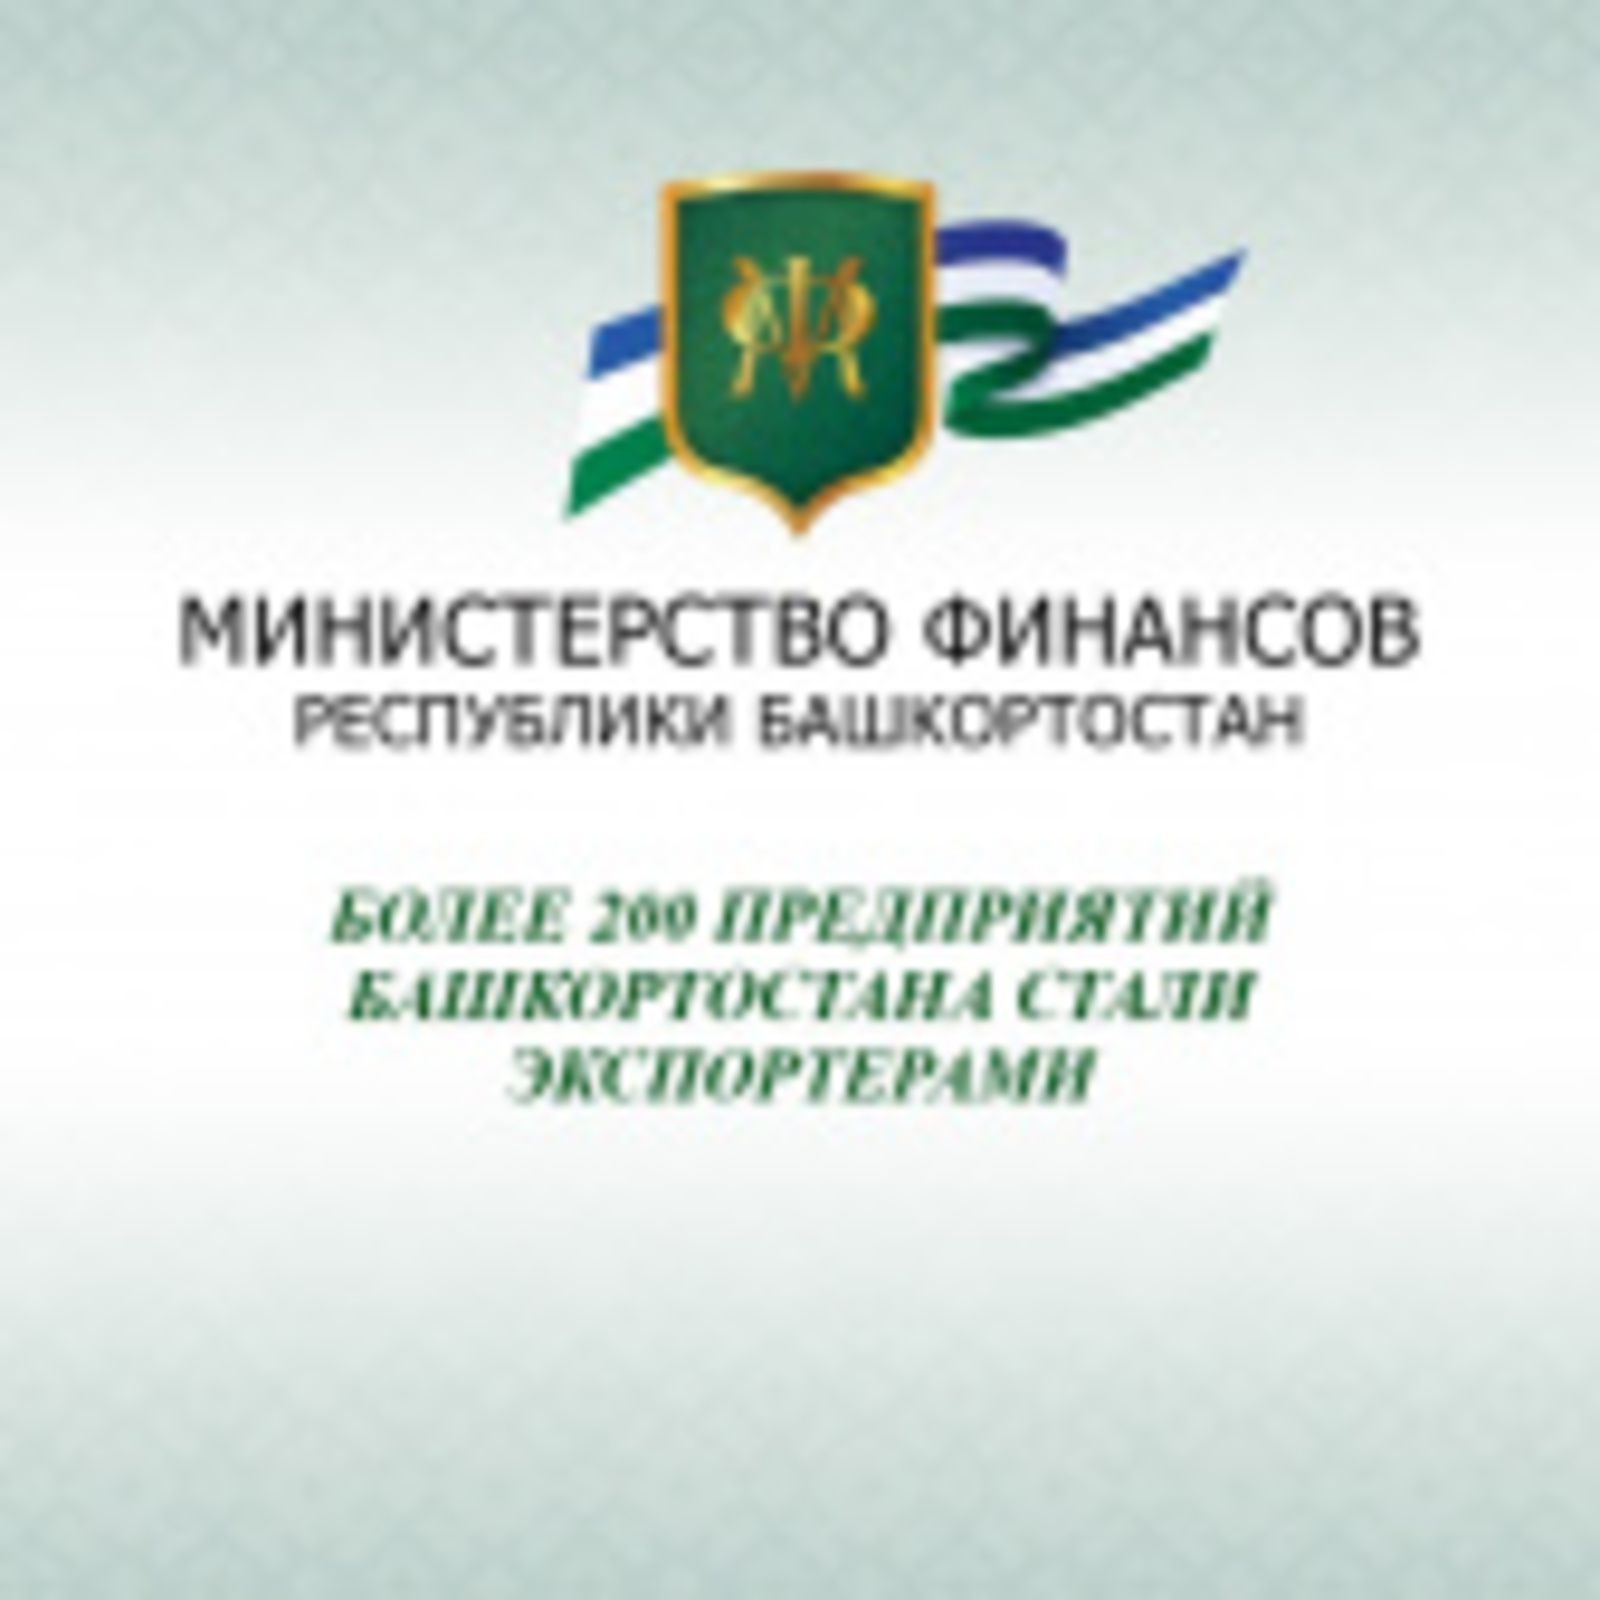 Более 200 предприятий Башкортостана стали экспортерами